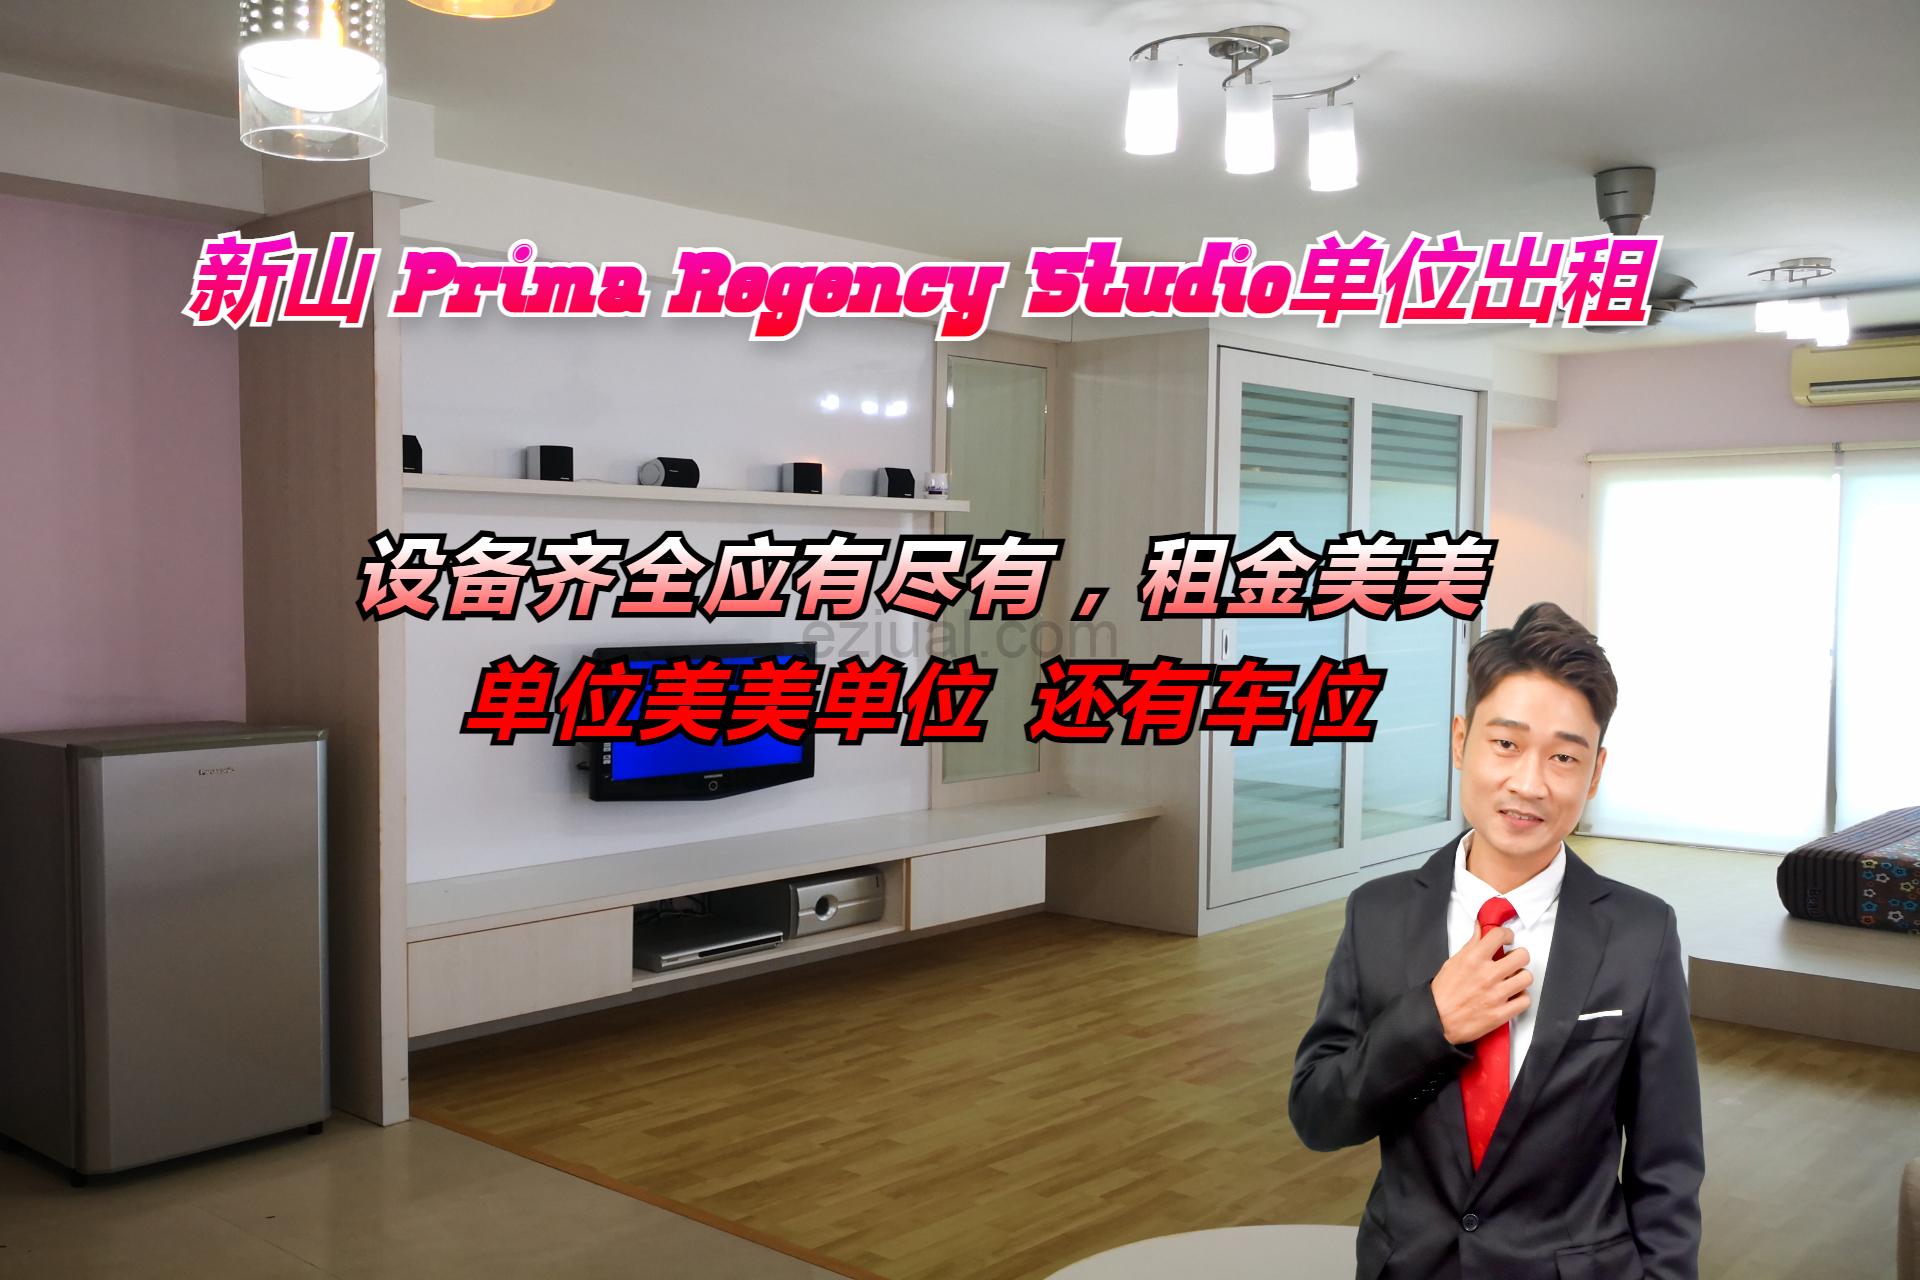 Prima Regency Full Furnish For Rent